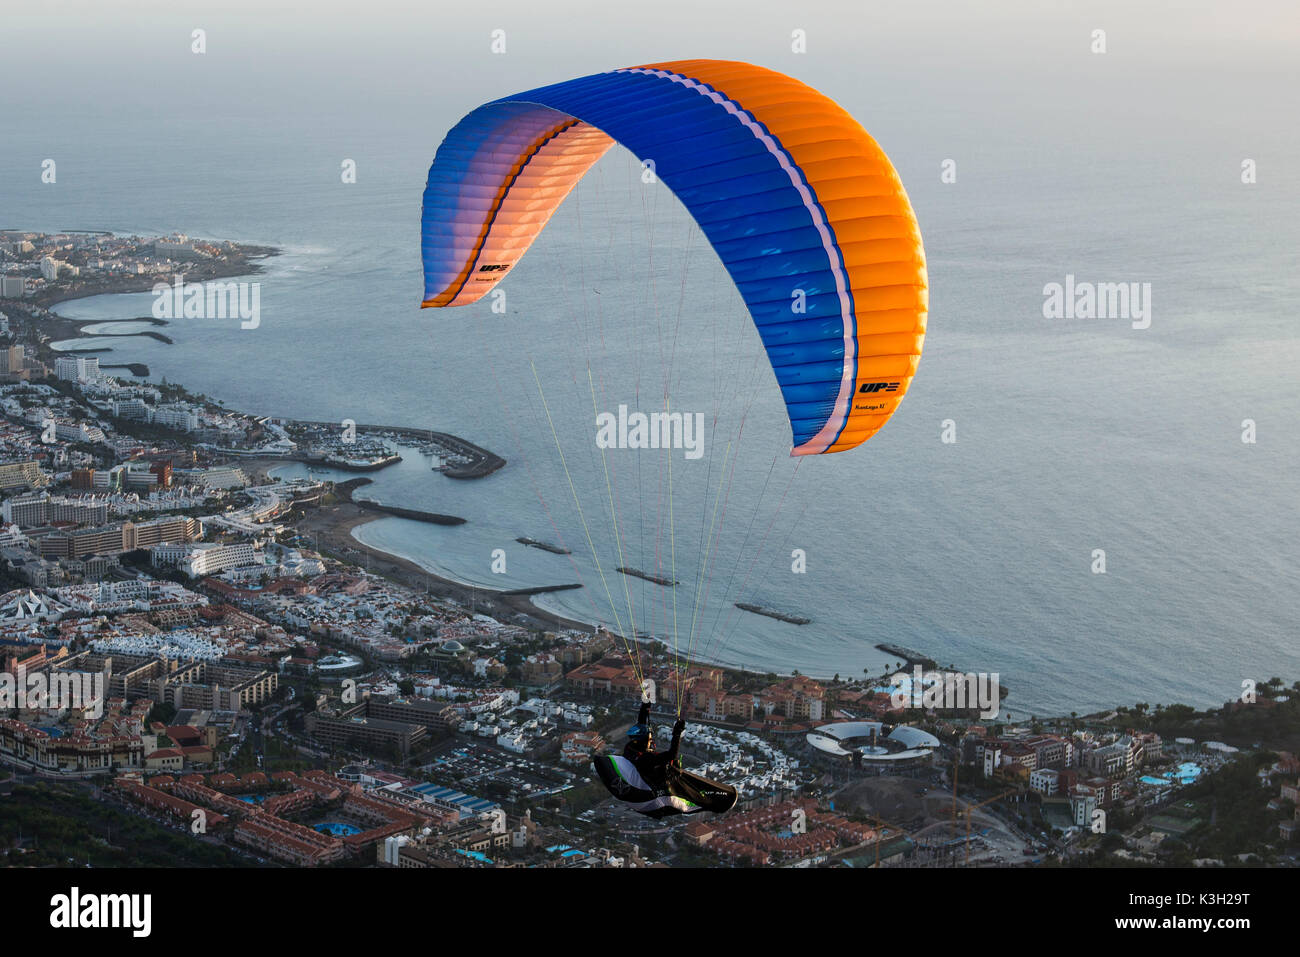 Paraglider, Playa de read Americas, los Christianos, the Atlantic, island Tenerife, Canaries island, aerial picture, Spain Stock Photo